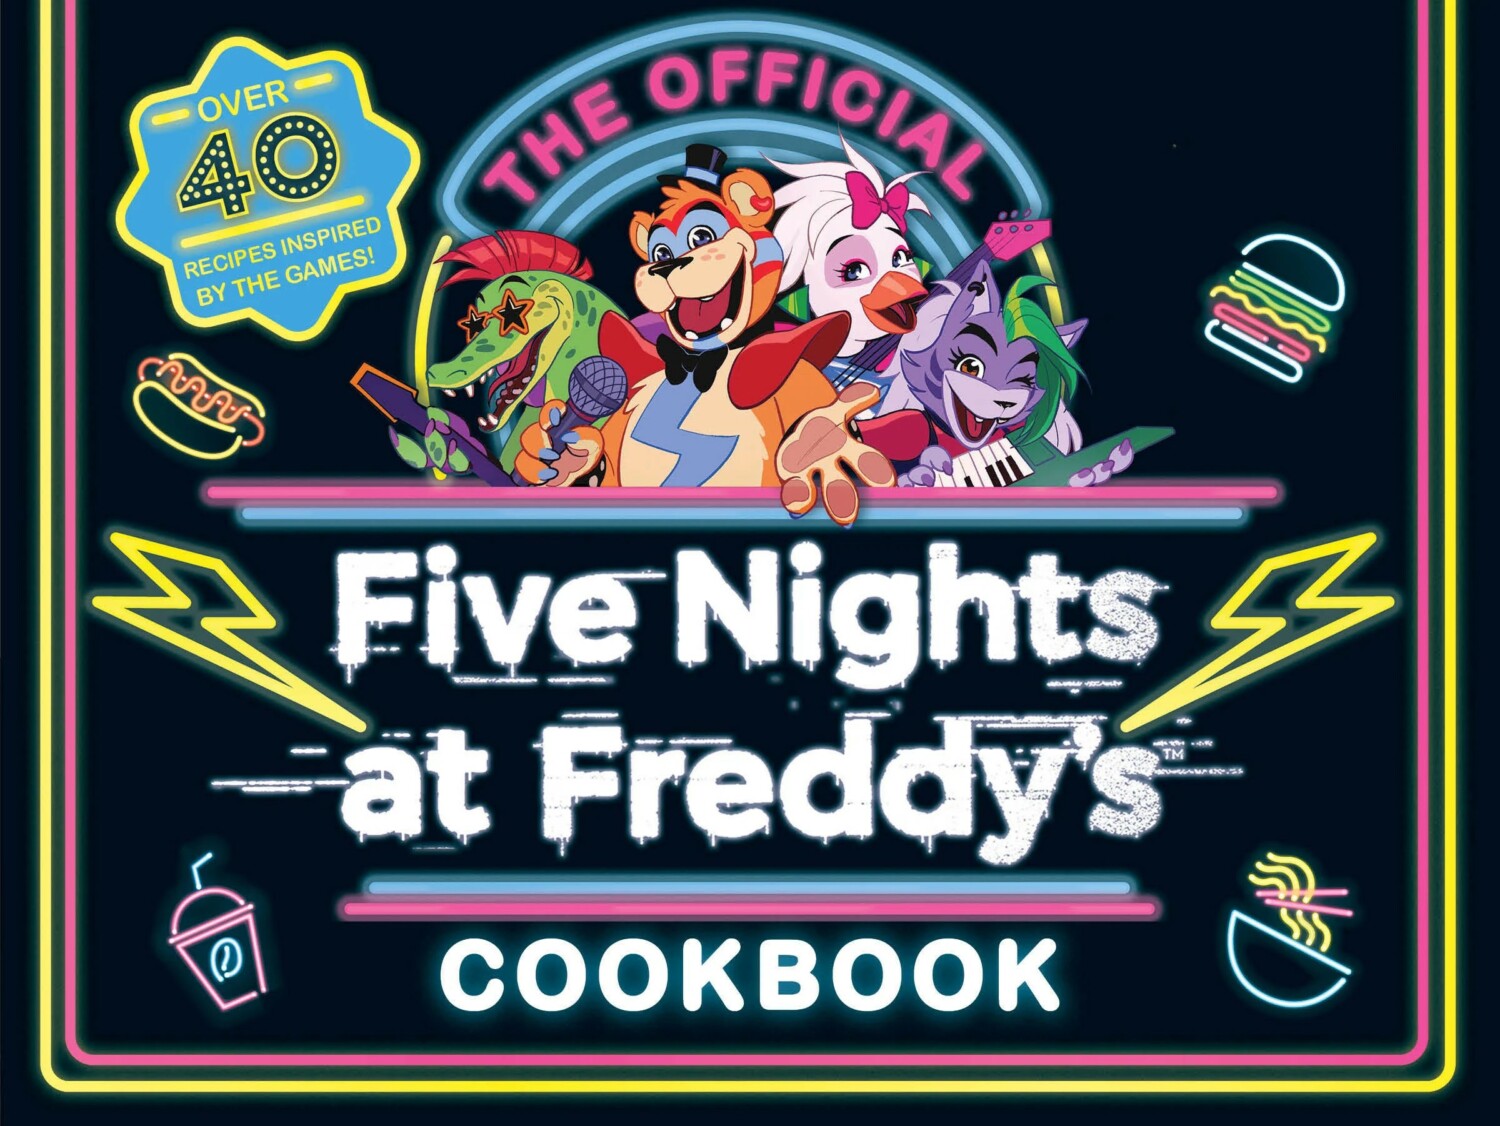 It seems digital versions of the FNAF cookbook still has FNAF plus